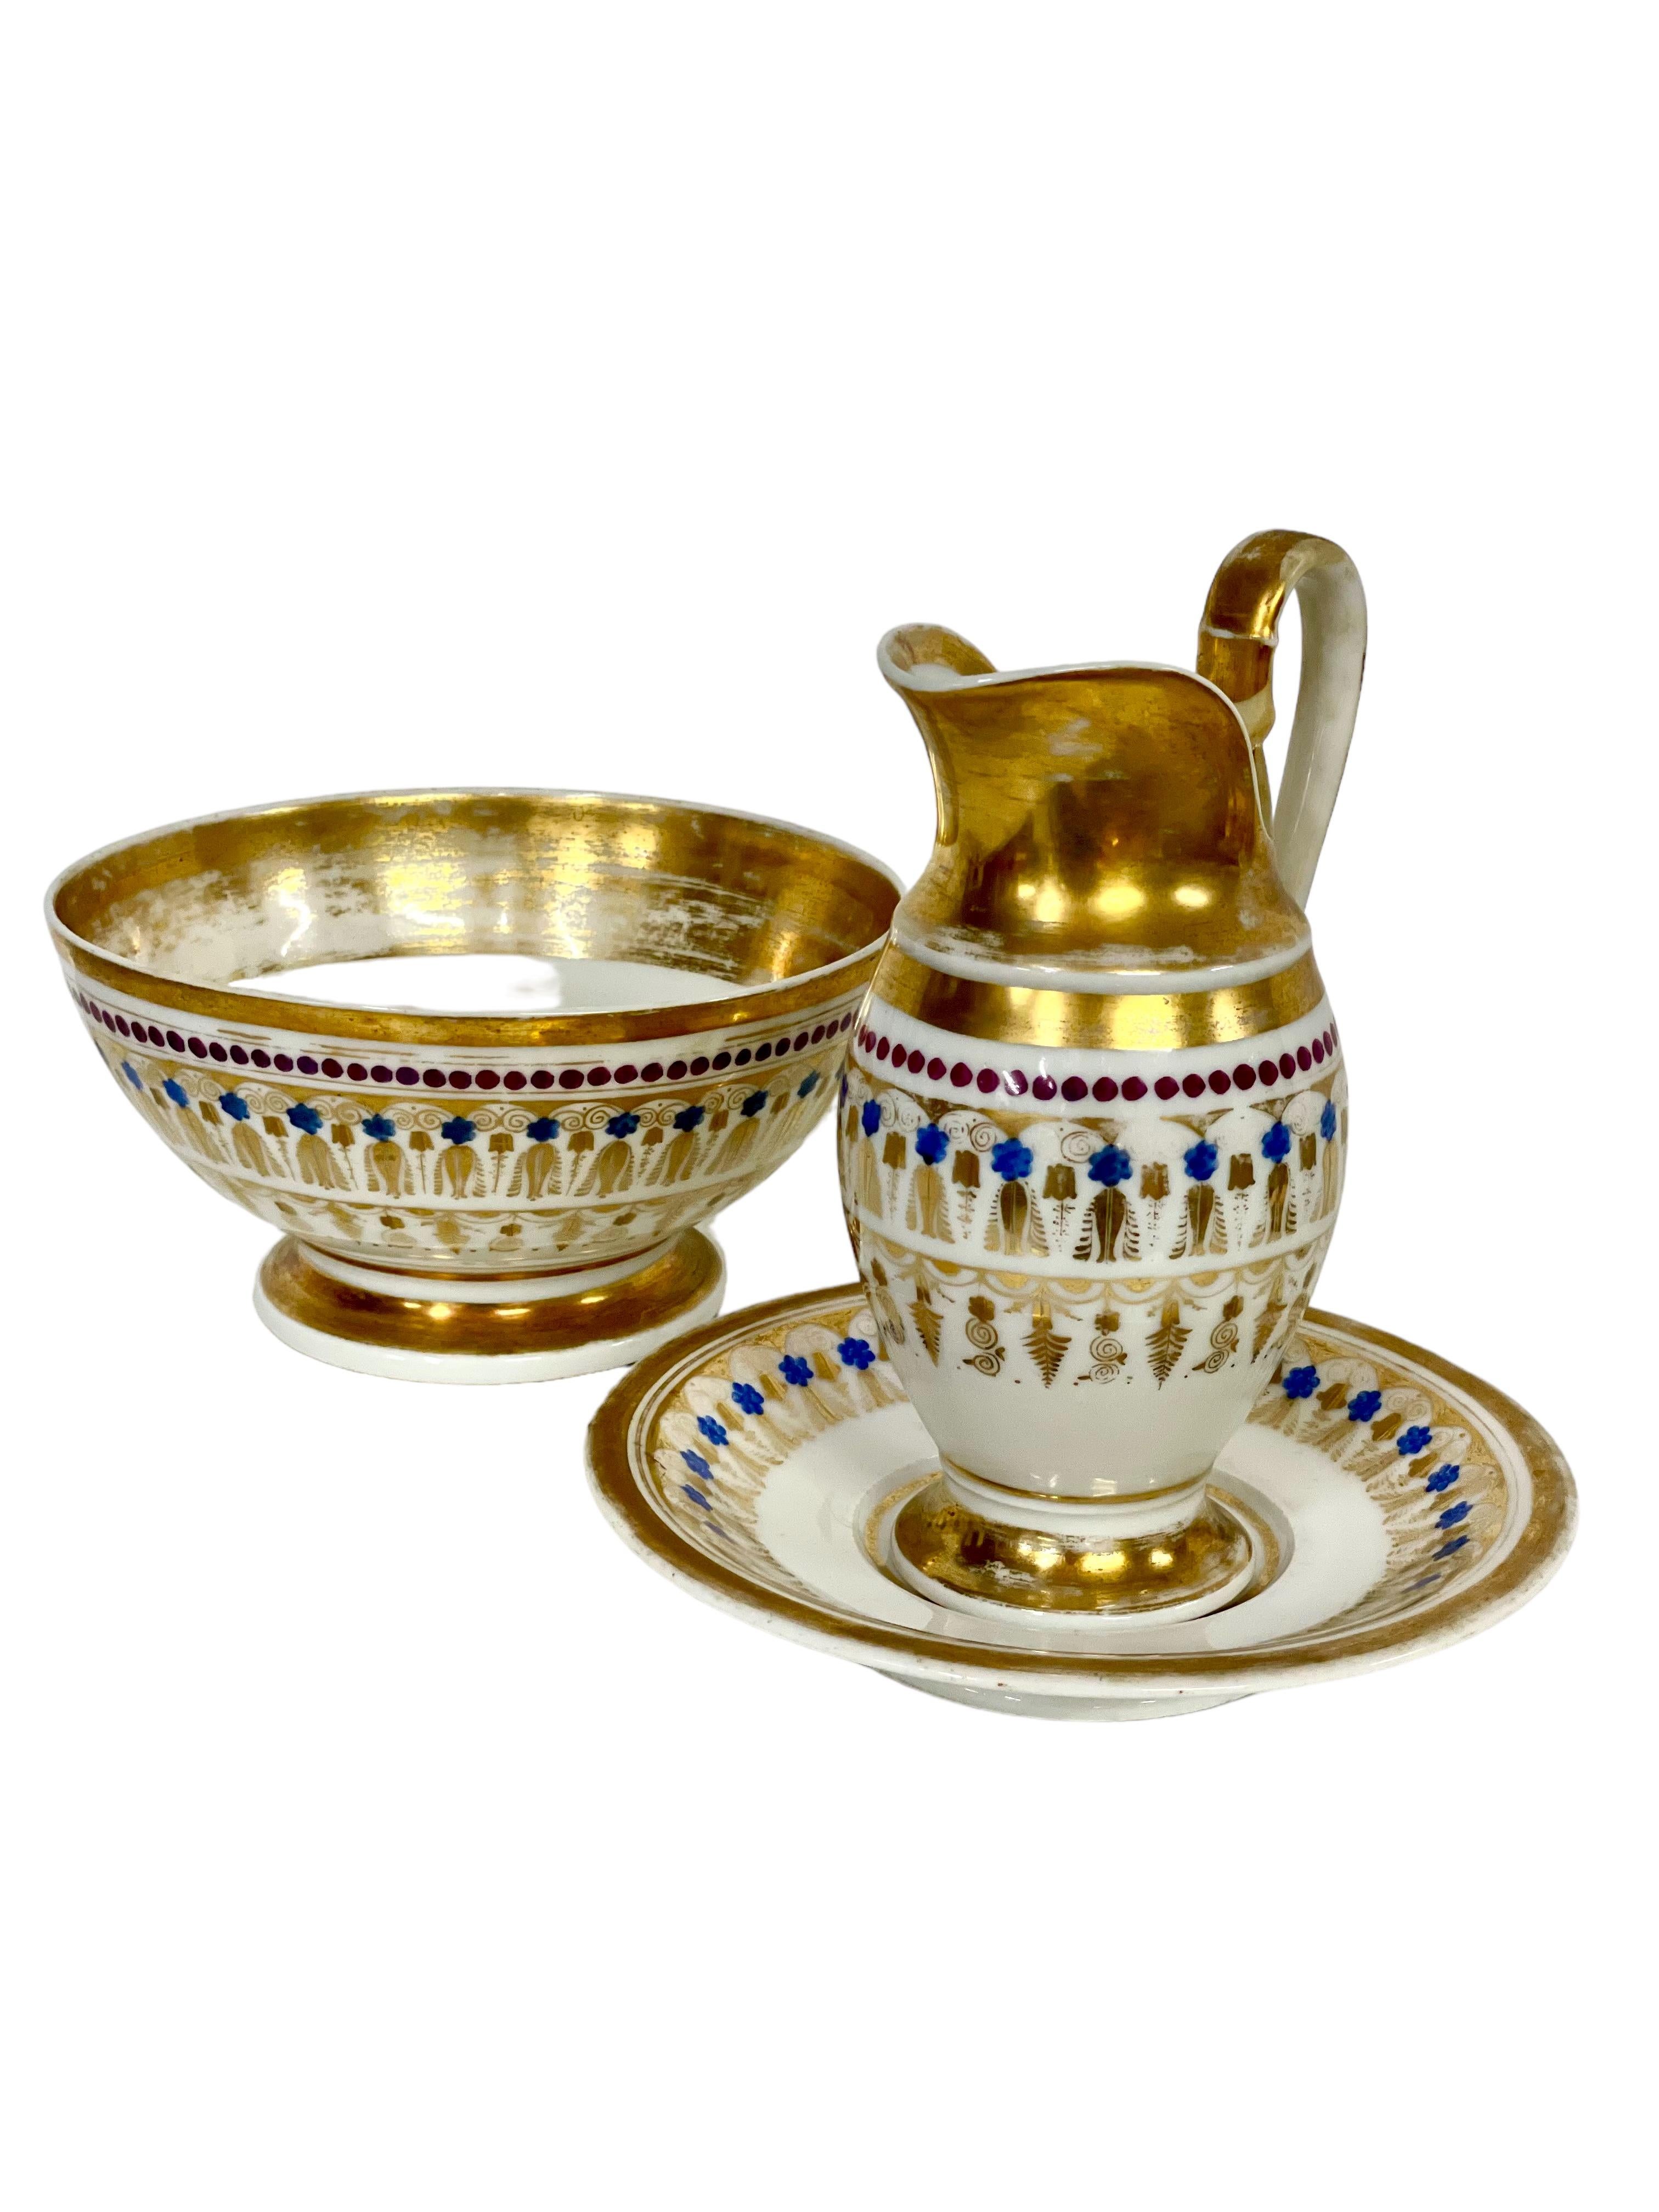 19th Century Old Paris Porcelain Wash Jug and Basin with Gilt Decoration For Sale